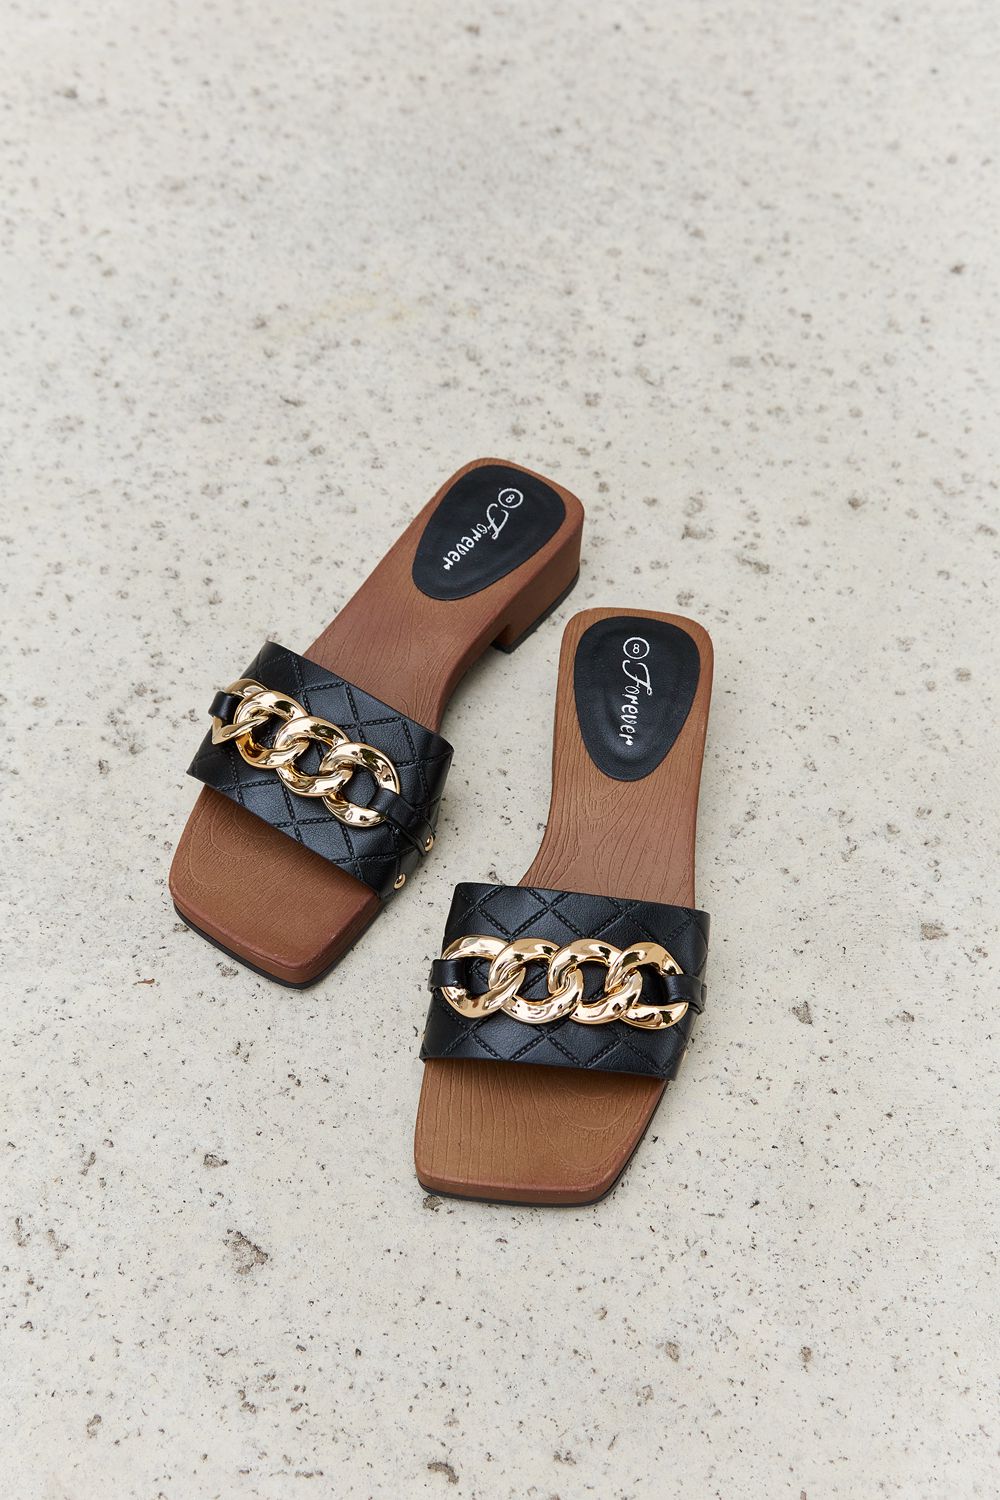 Forever Link Square Toe Chain Detail Clog Sandal in Black - Tigbul's Fashion